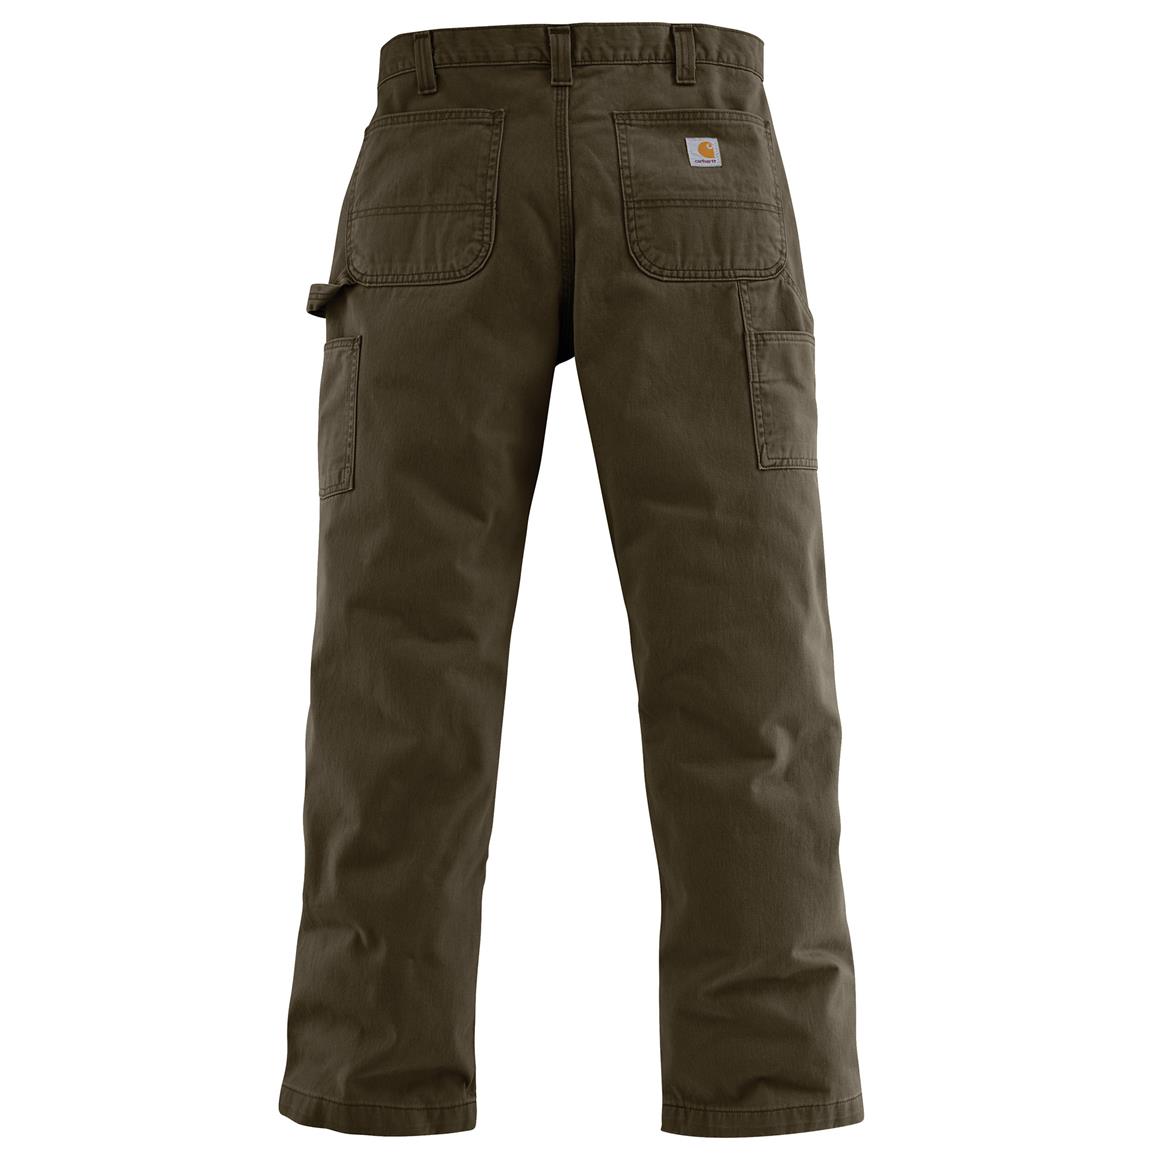 Guide Gear Men's Ripstop Cargo Work Pants, W38 L30, Graphite Gray